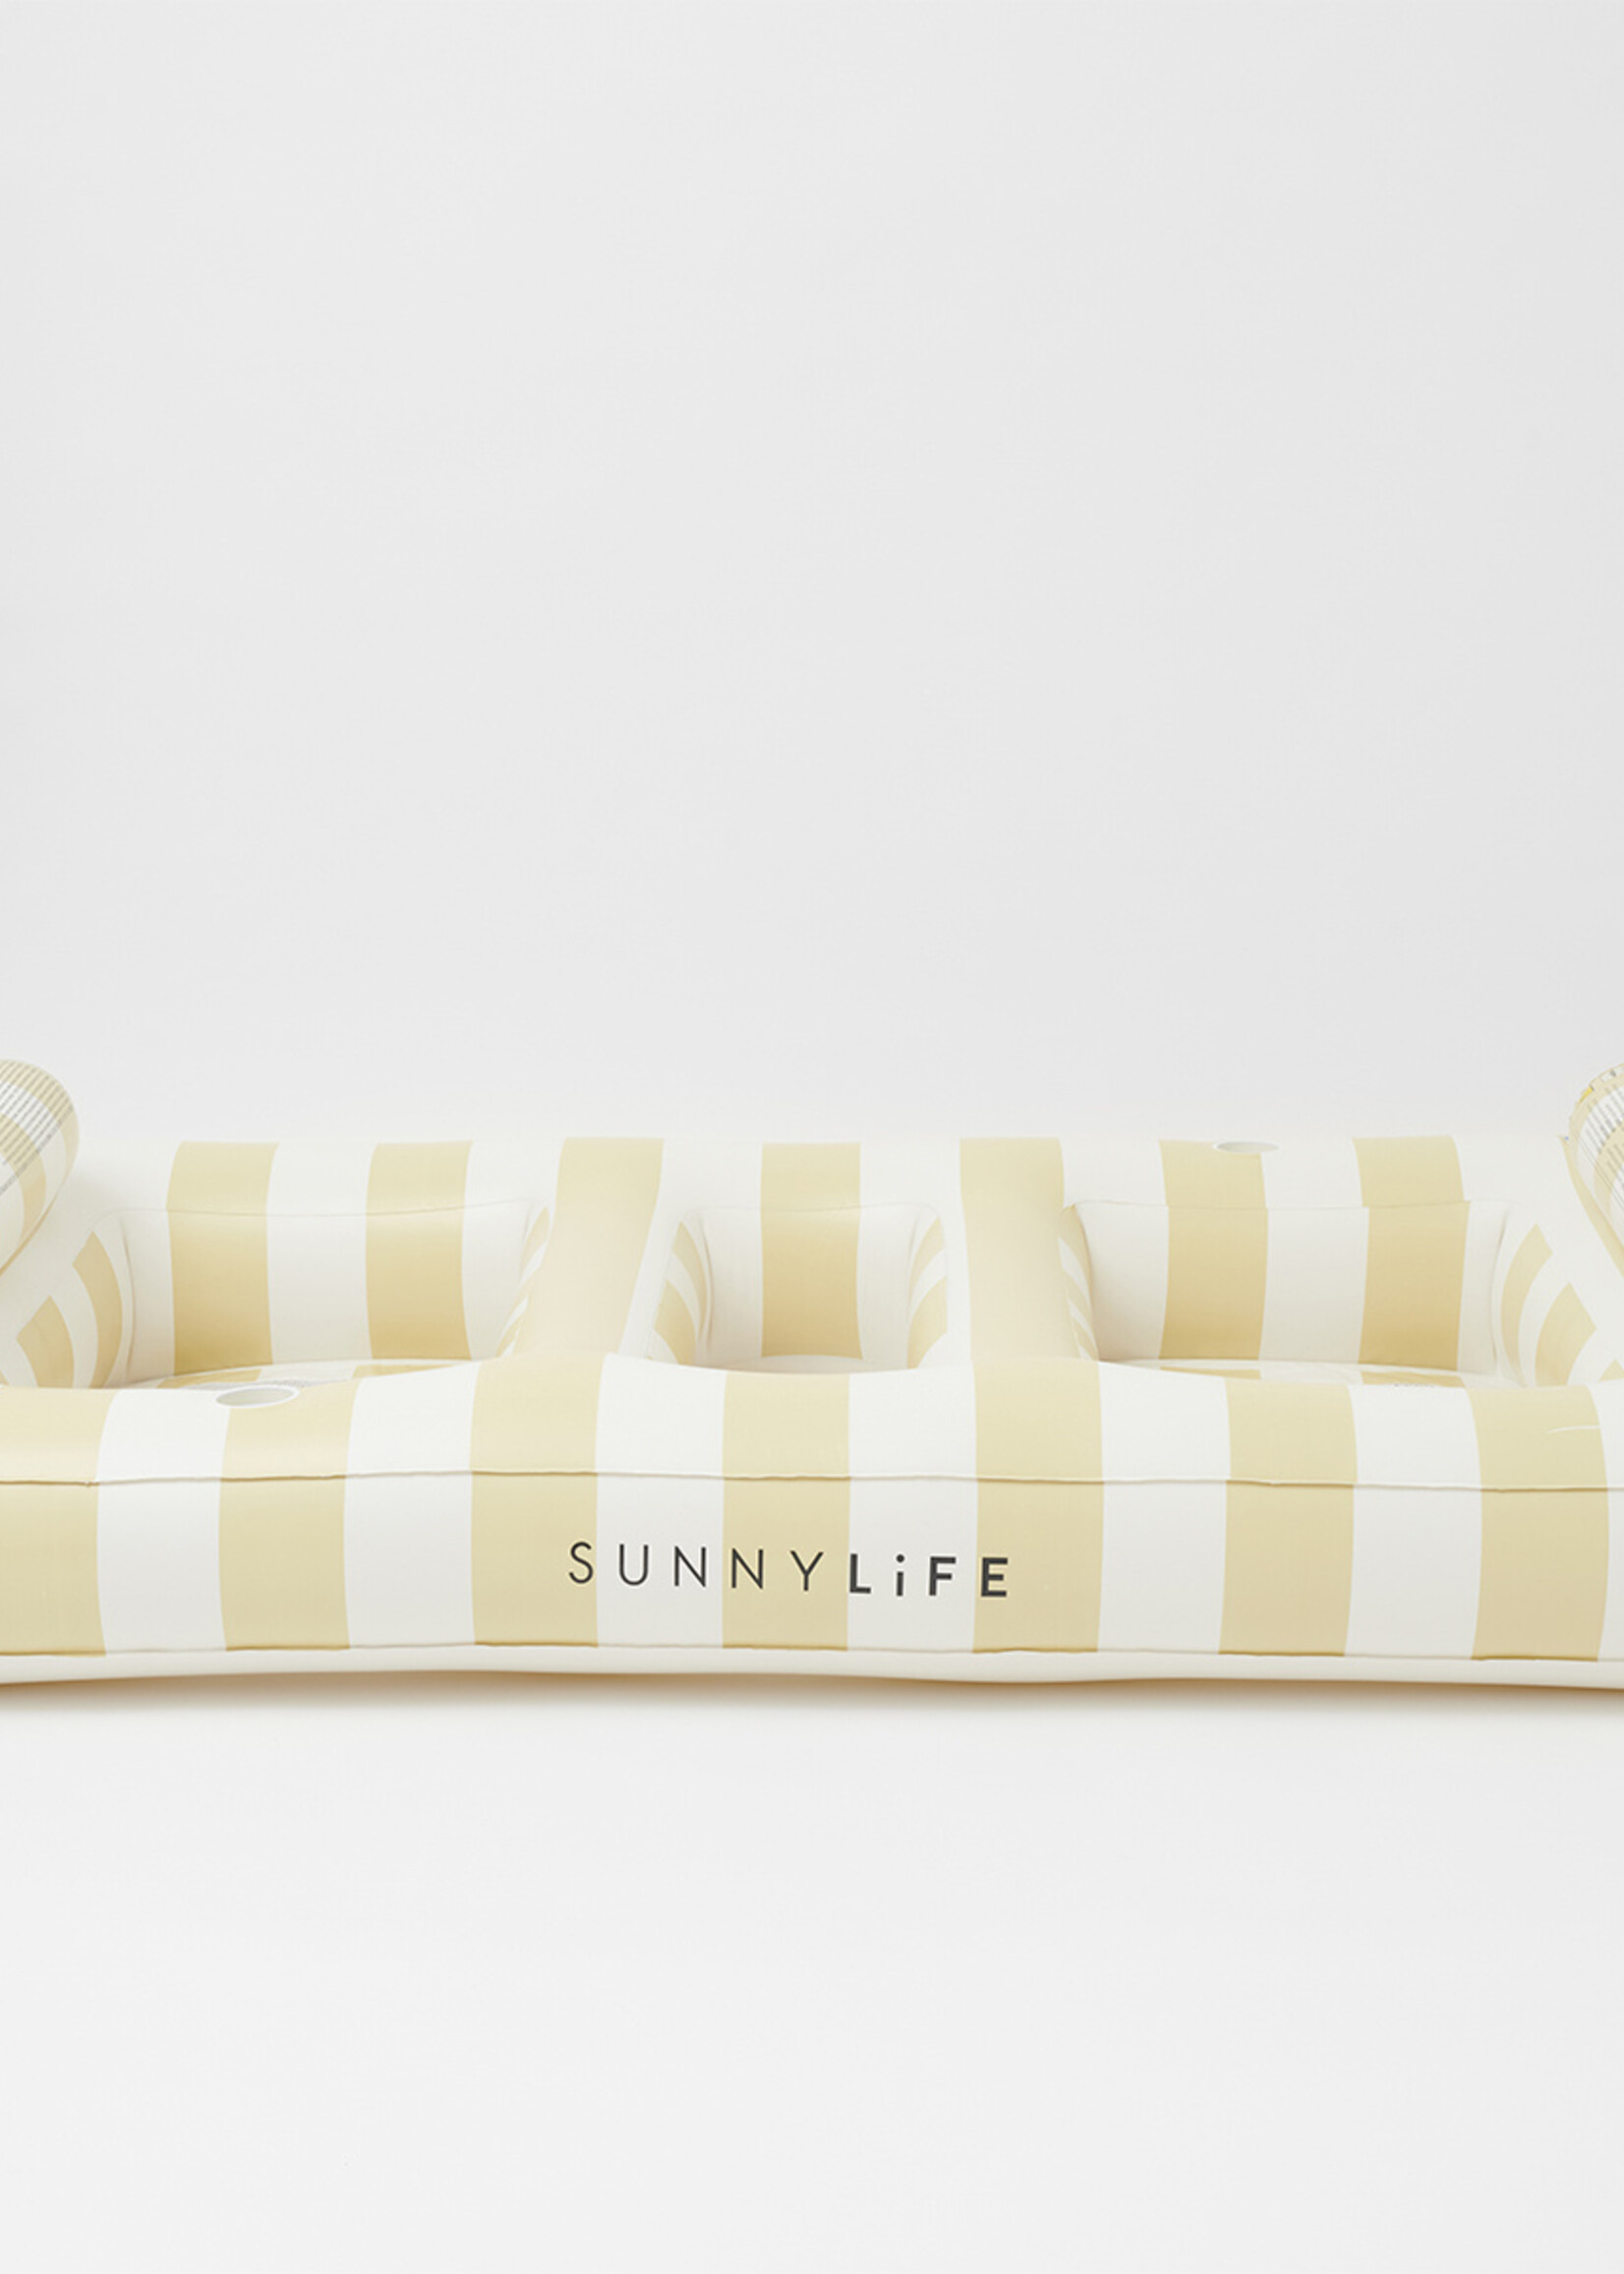 Sunnylife SunnyLife - Mango Bay - Hamac flottant de luxe - 2 personnes - Mutard